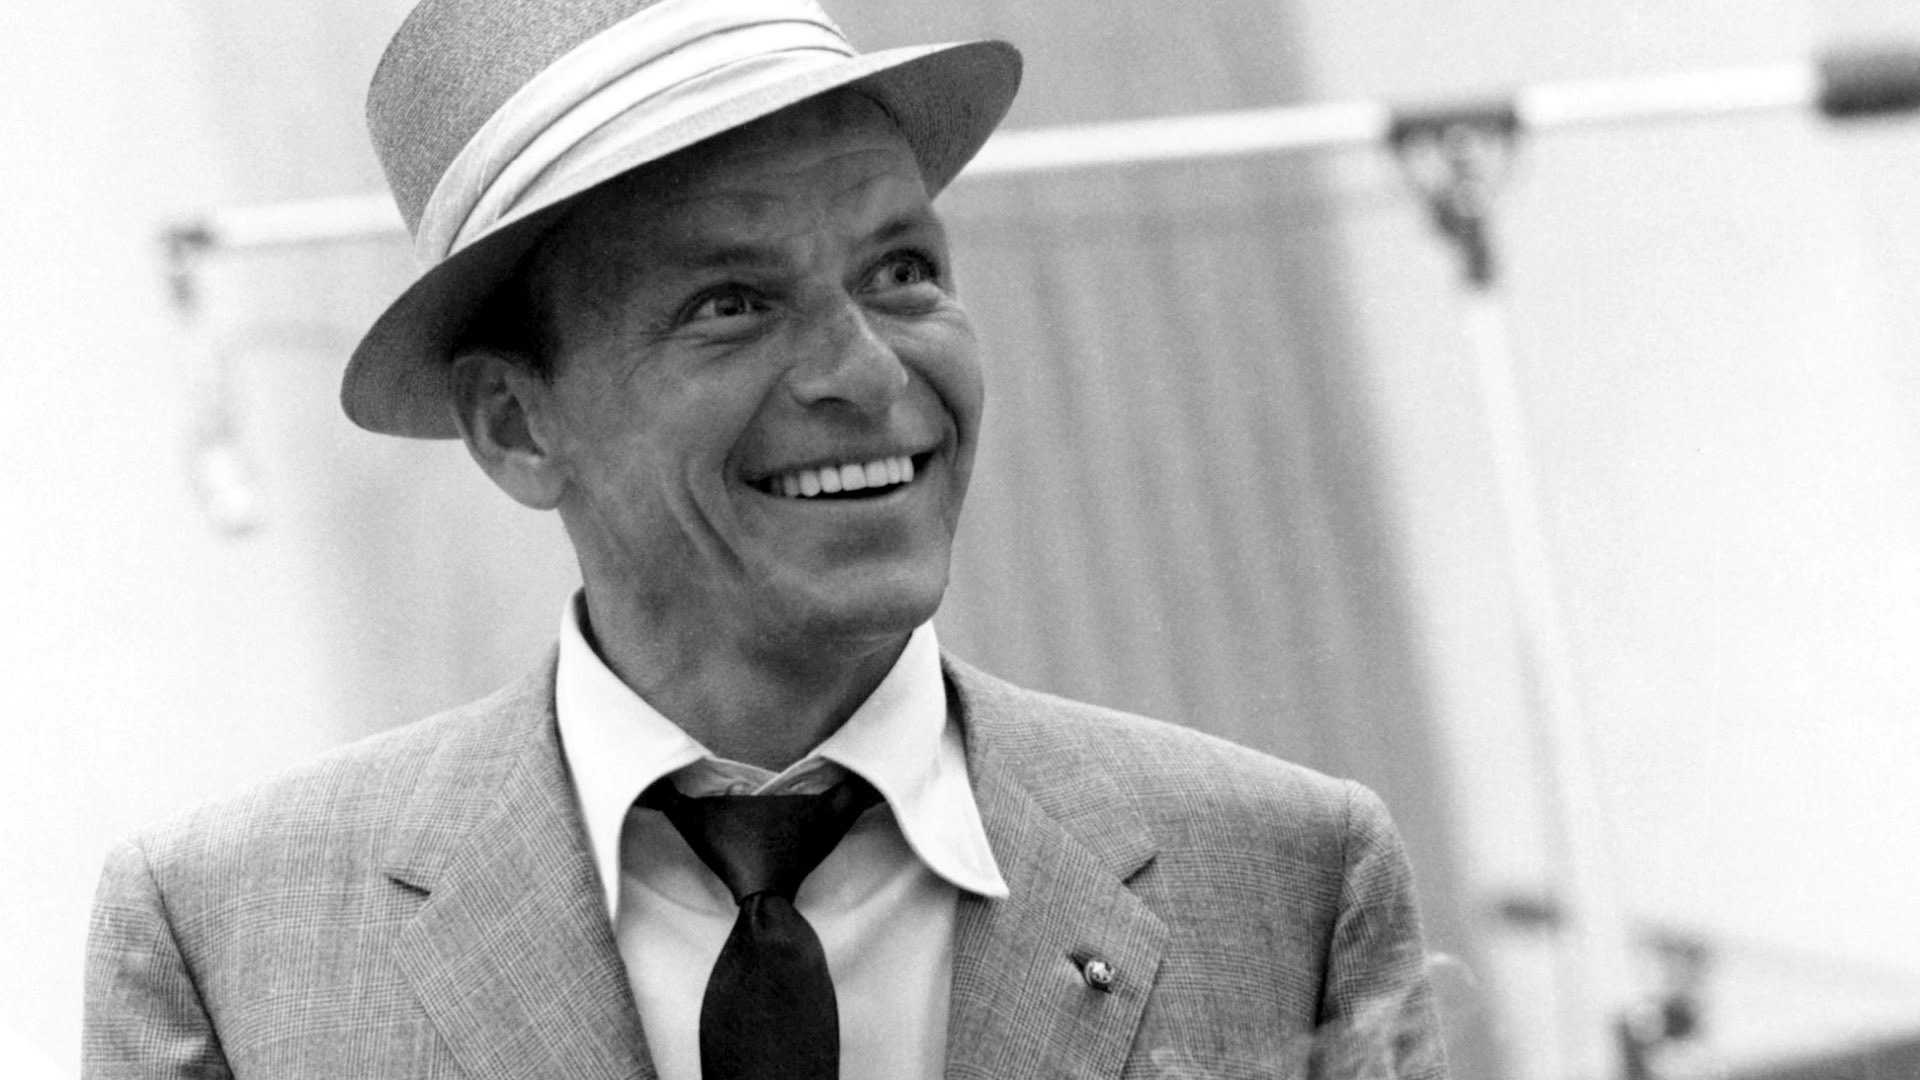 Frank Sinatra Smile Wallpaper 60723 1920x1080 px